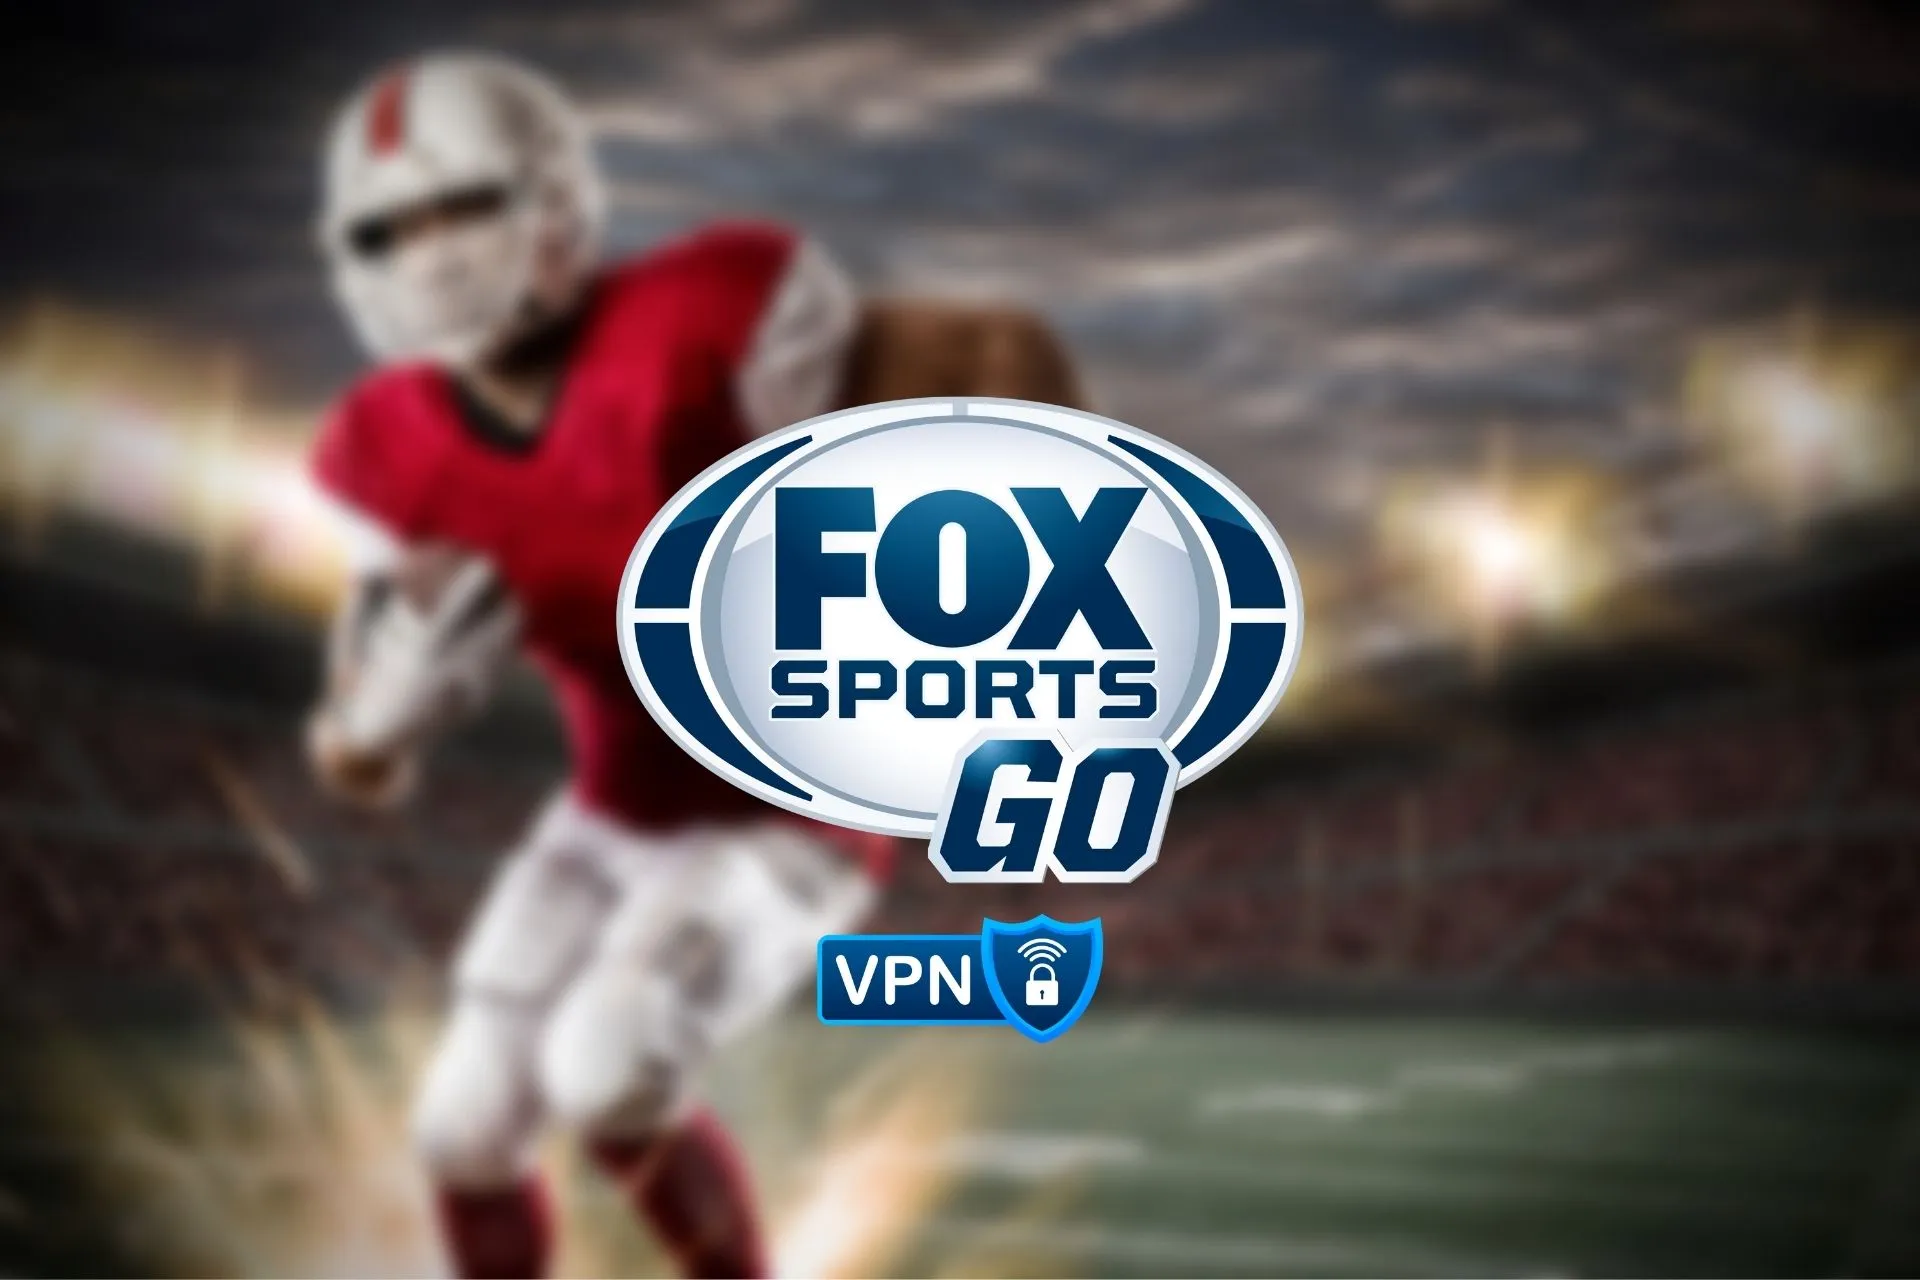 Fix Fox Sports Go VPN not working